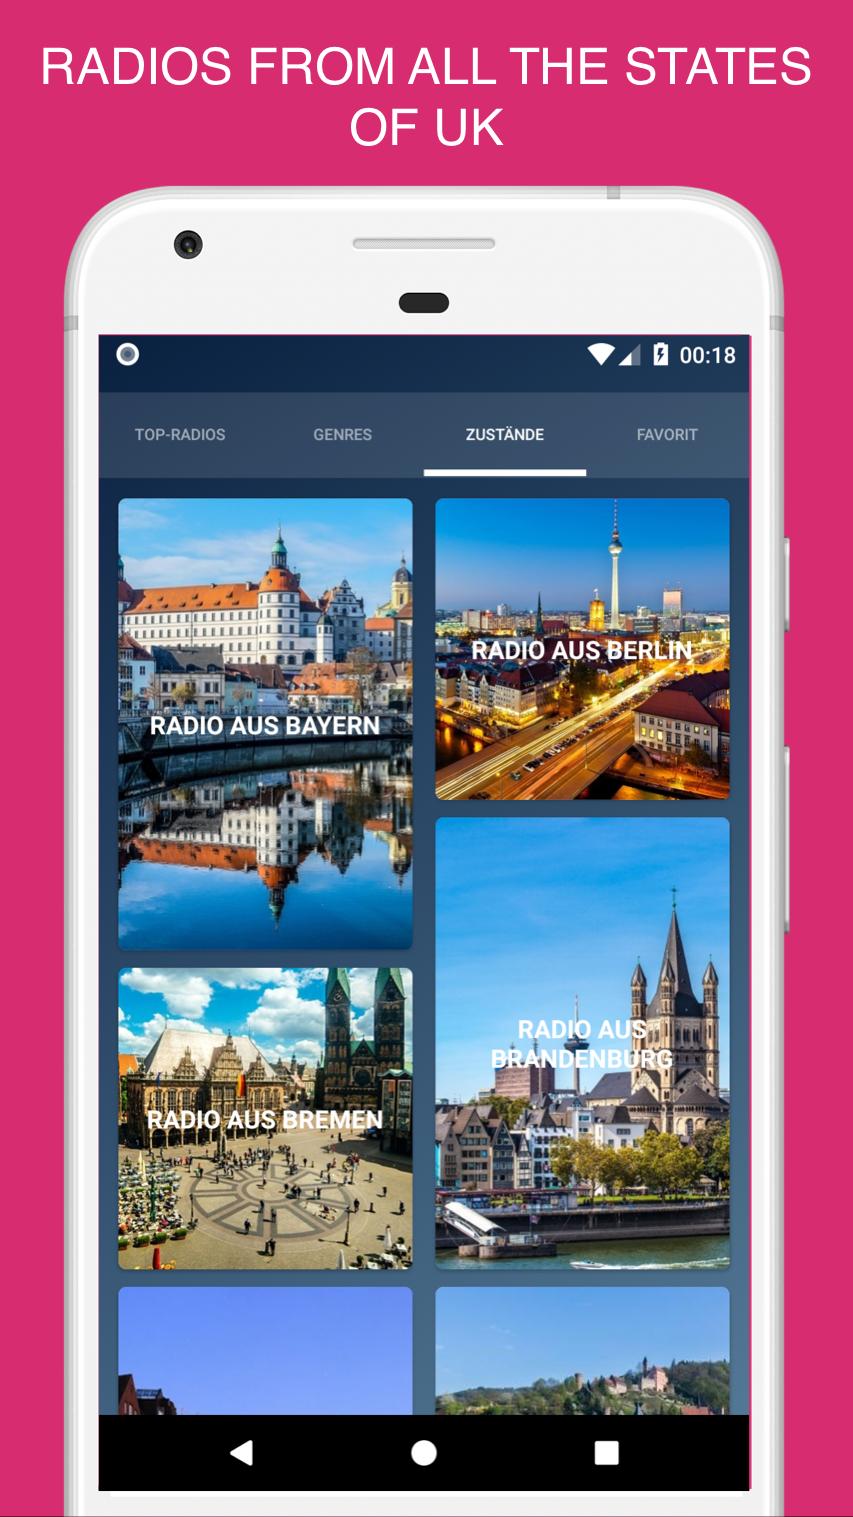 Radio Gong 96.3 München App FM DE Kostenlos for Android - APK Download